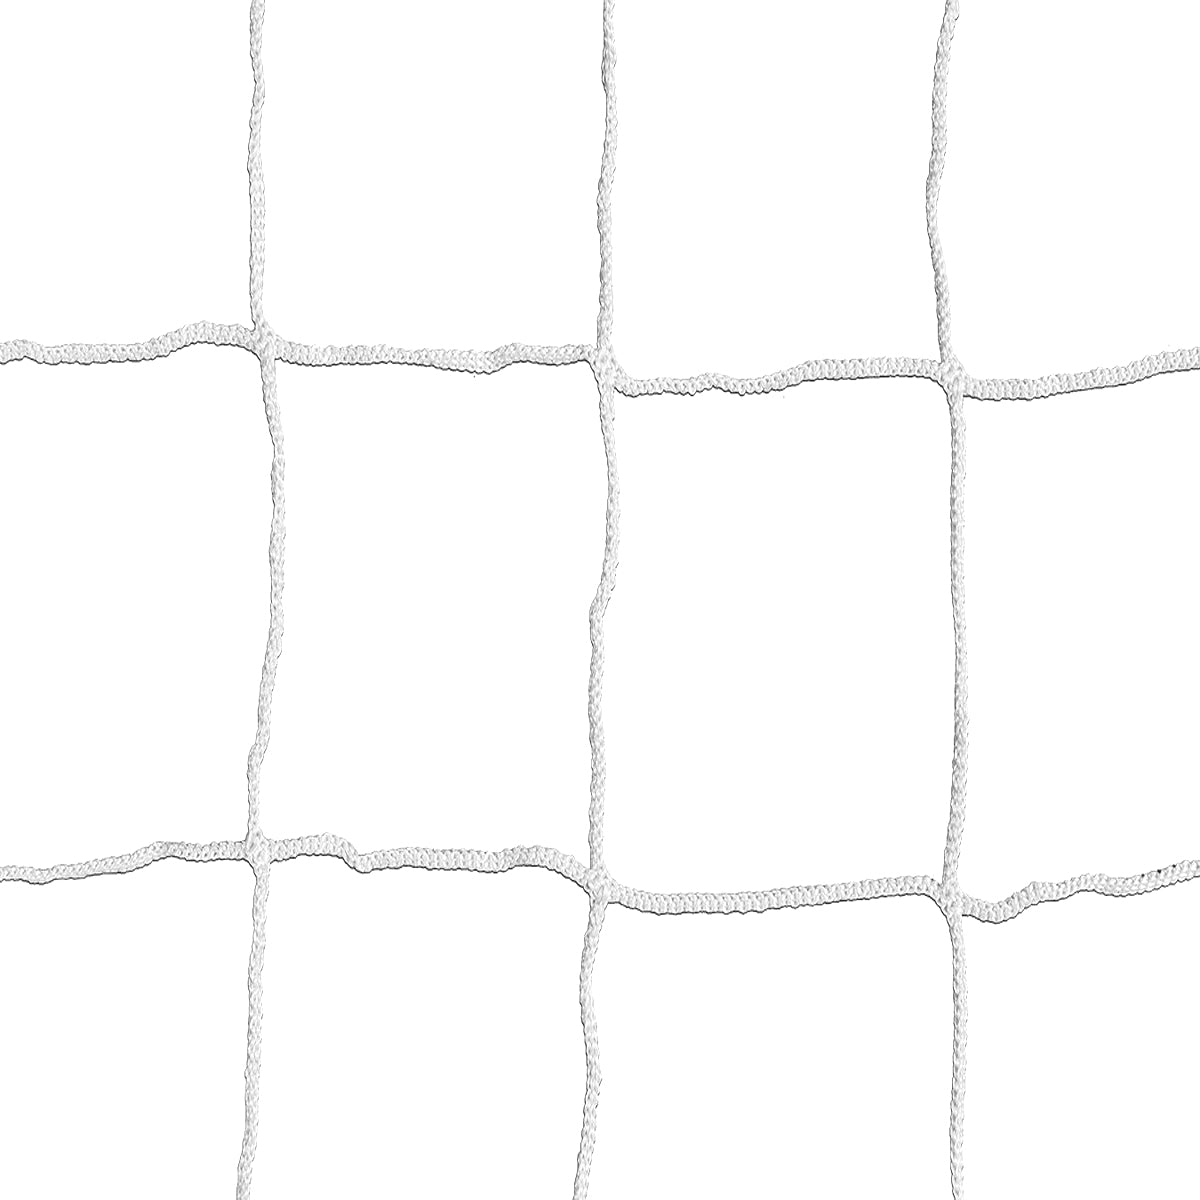 Kwikgoal 3mm Solid Braid Knotless Net | 3B26 Nets Kwikgoal 